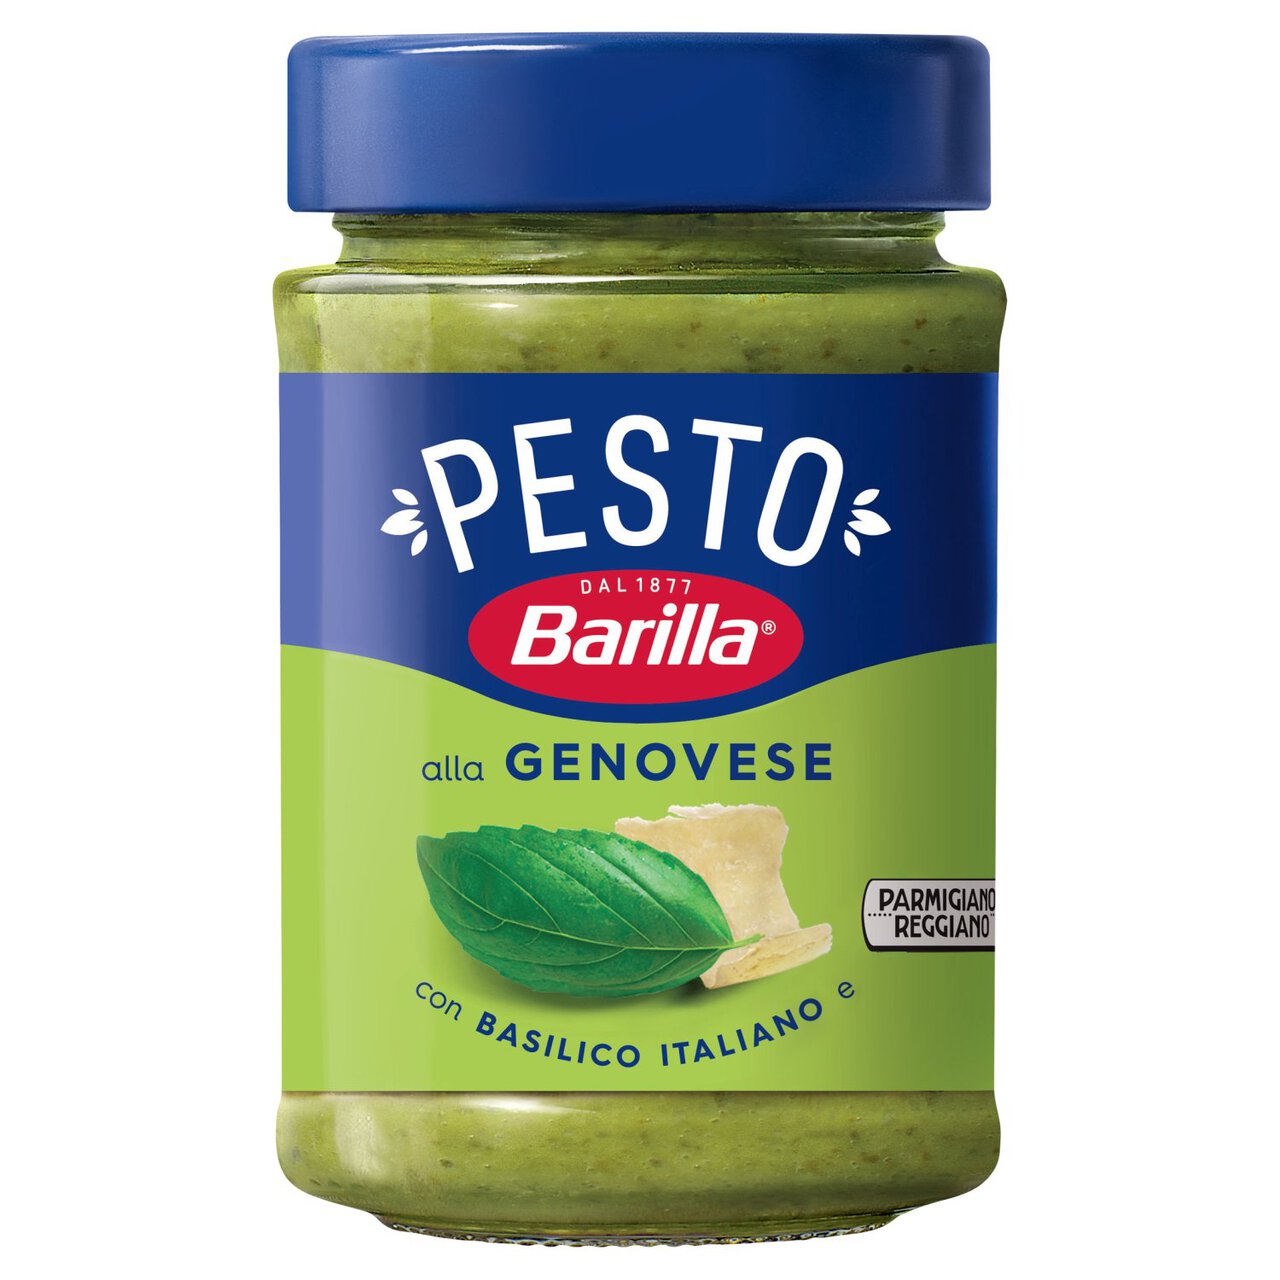 Barilla Pesto Genovese Pasta Sauce 190g